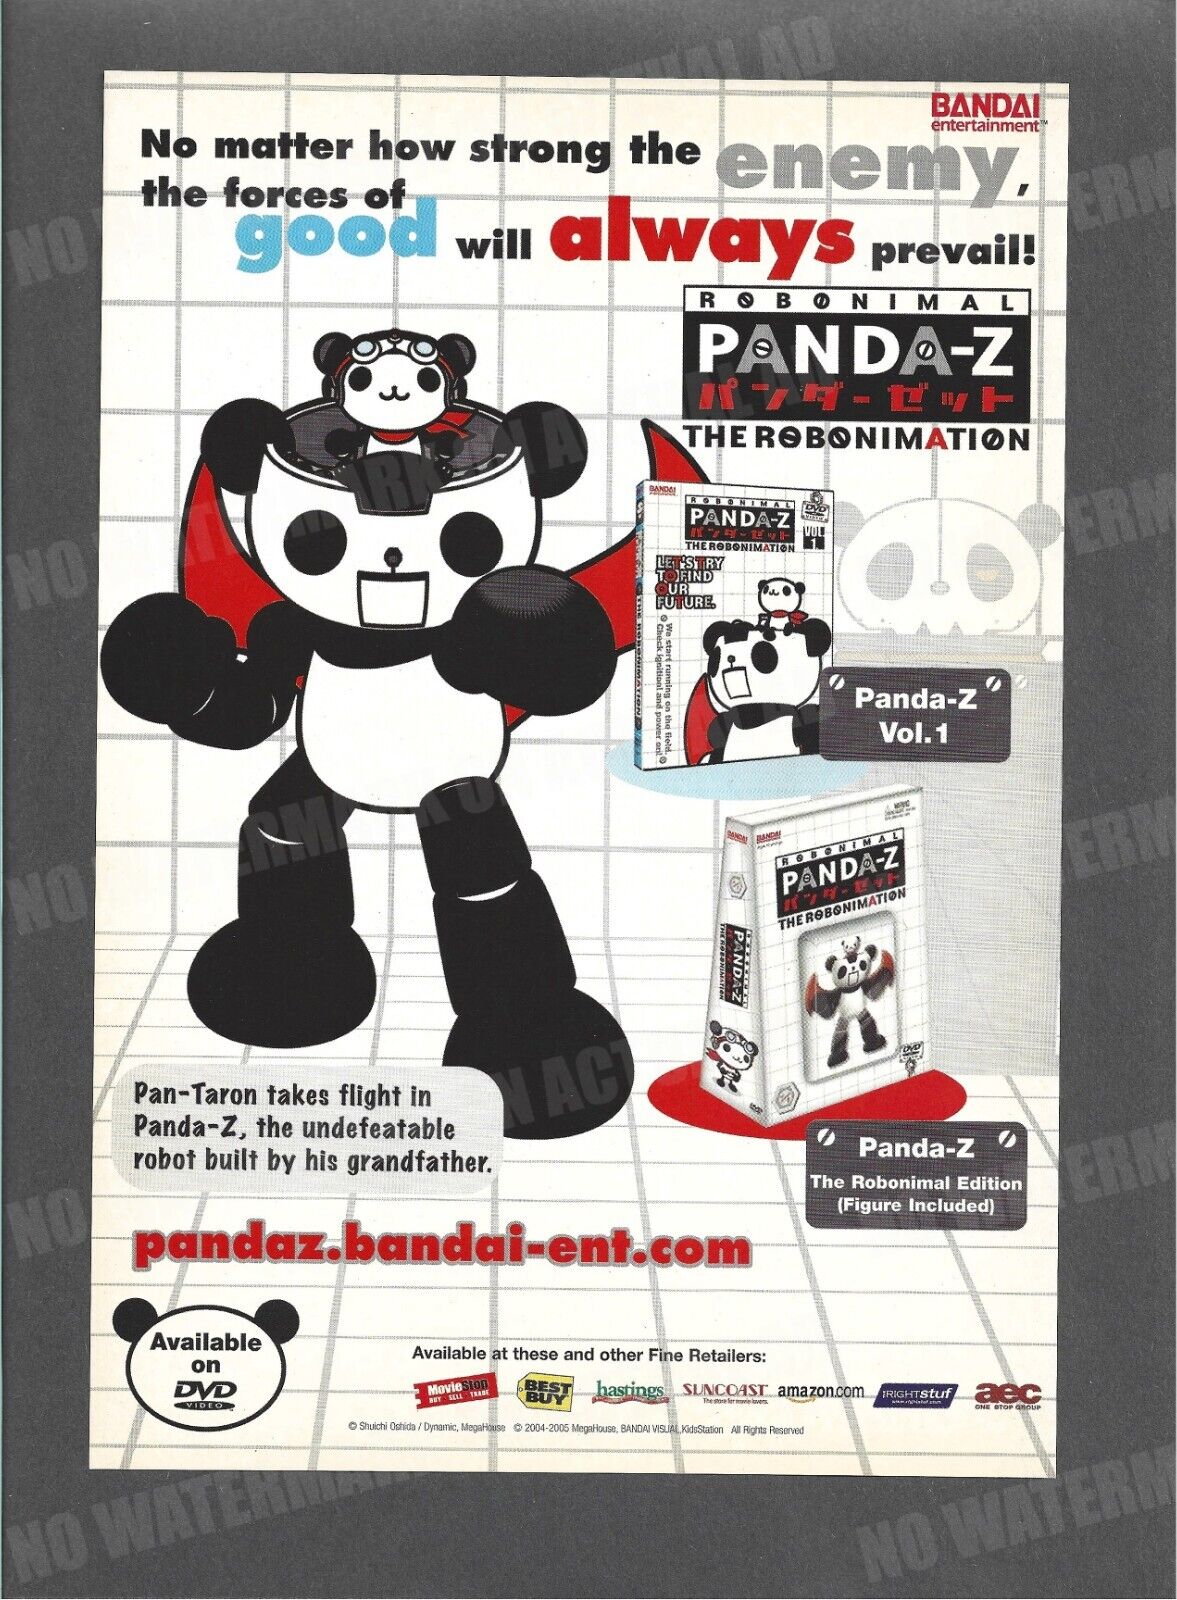 Panda-Z Bandai Ent Trade Print Magazine Ad Anime DVD ADVERT ADVERTISEMENT